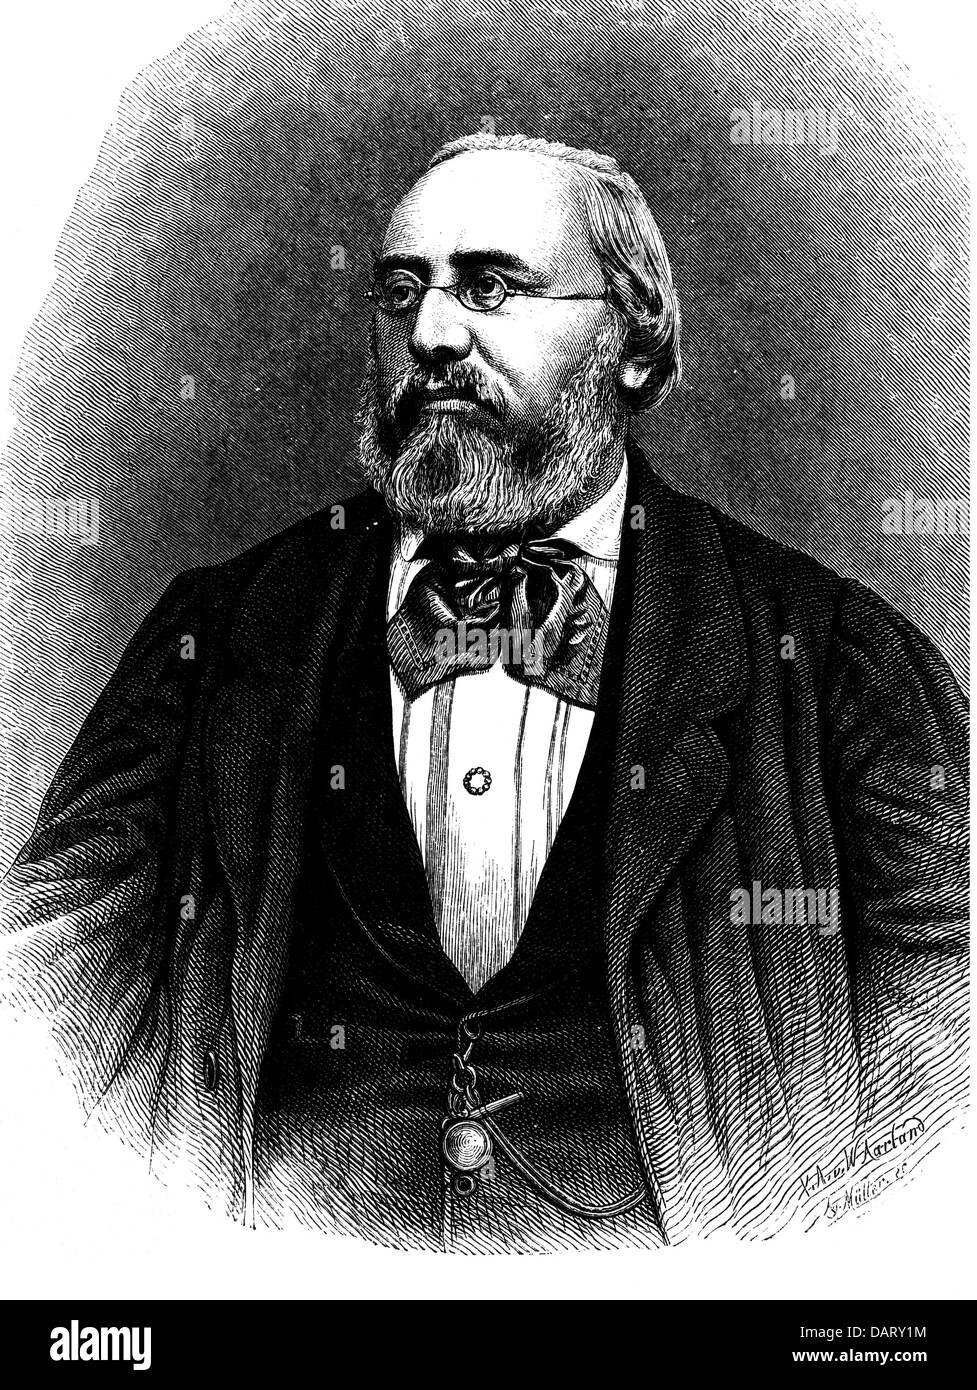 Schmid, Hermann von, 30.3.1815 - 19.10.1880, German author / writer (poet), half length, based on drawing by J. Mueller, wood engraving, 19th century, Stock Photo